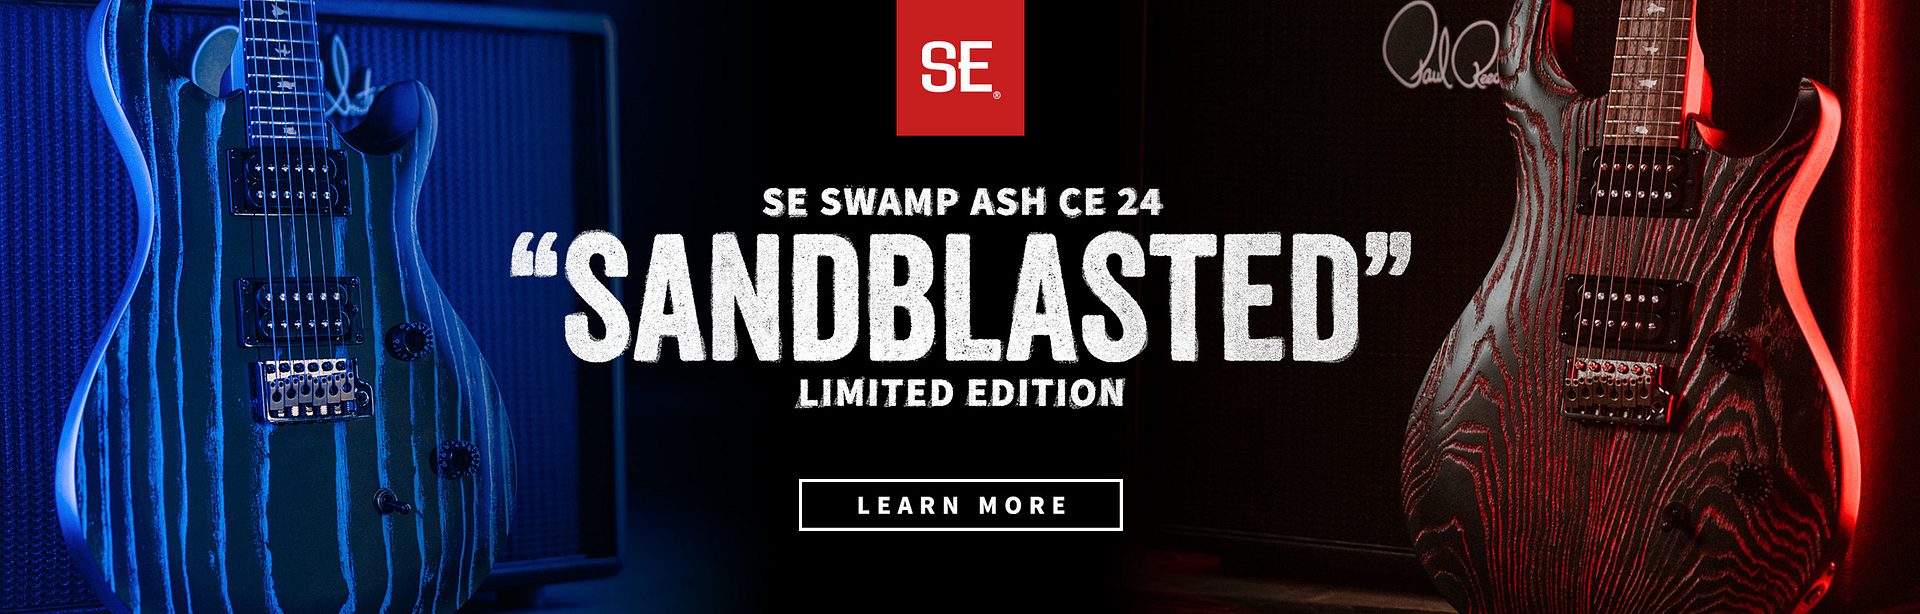 SE Swamp Ash CE 24 "Sandblasted" Limited Edition